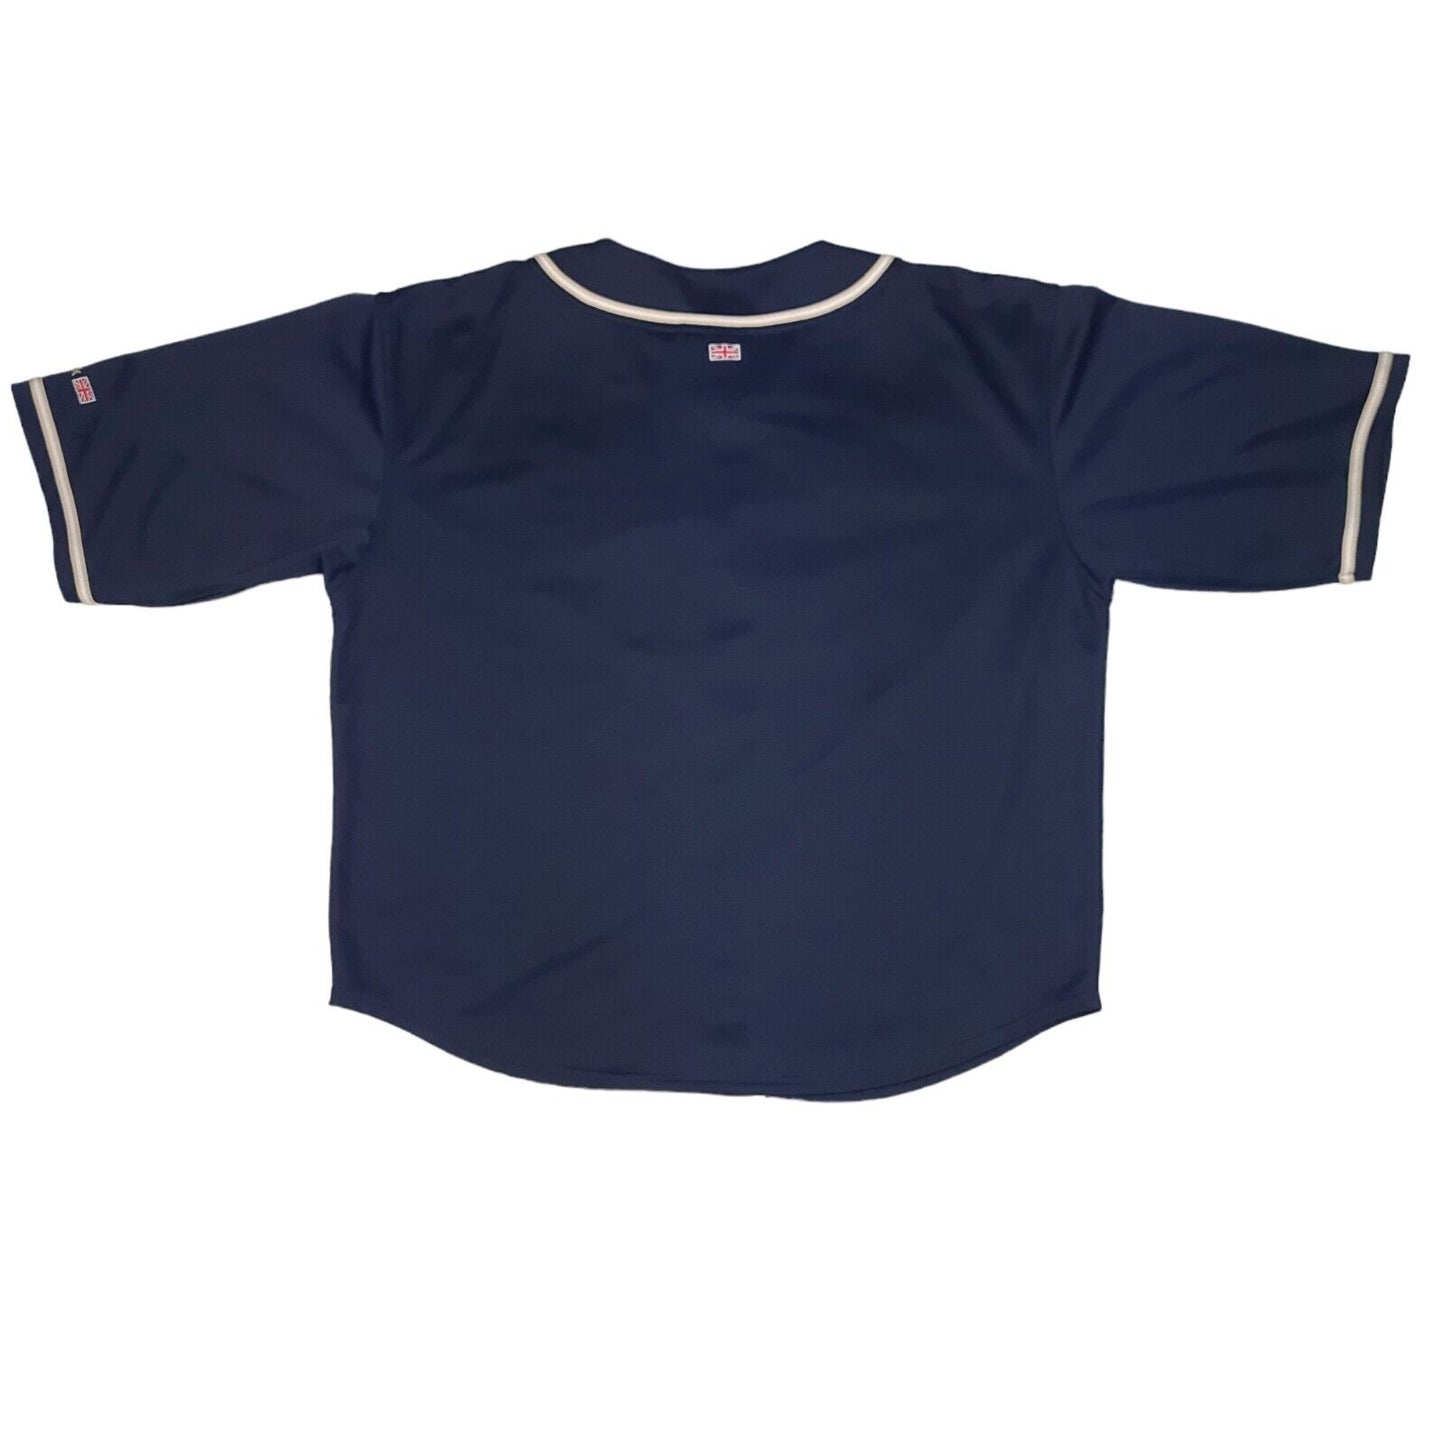 Reebok Classic Blue Baseball Jersey Shirt United Kingdom